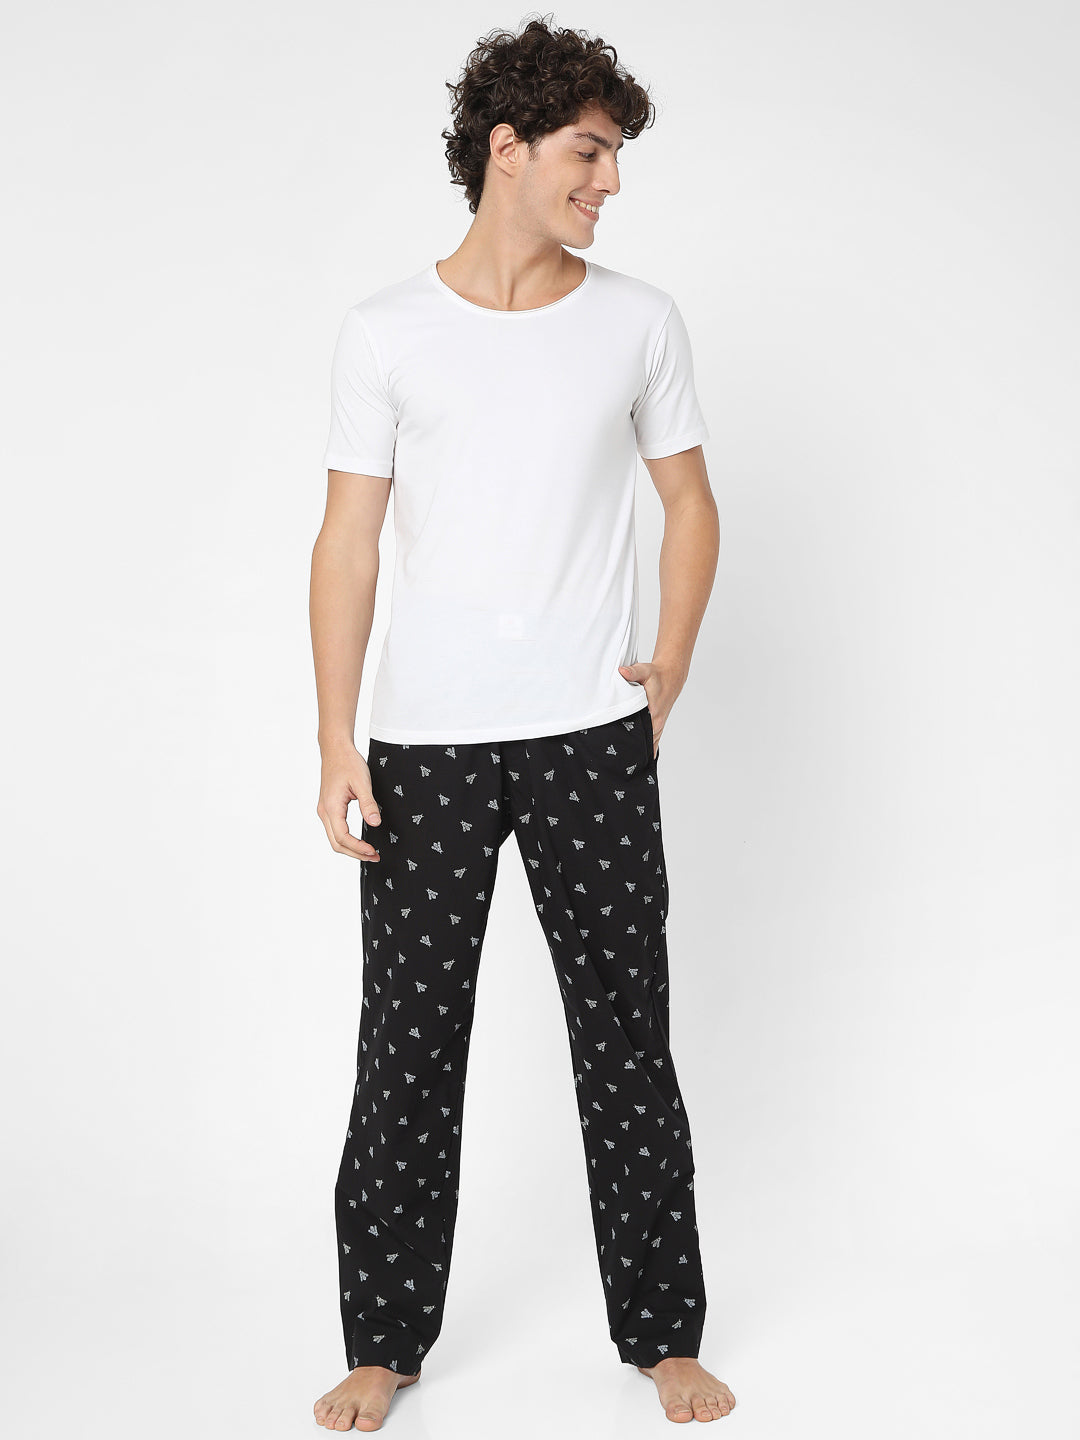 Mens Black and White Plaid Pajama Pants | buffaloveapparel